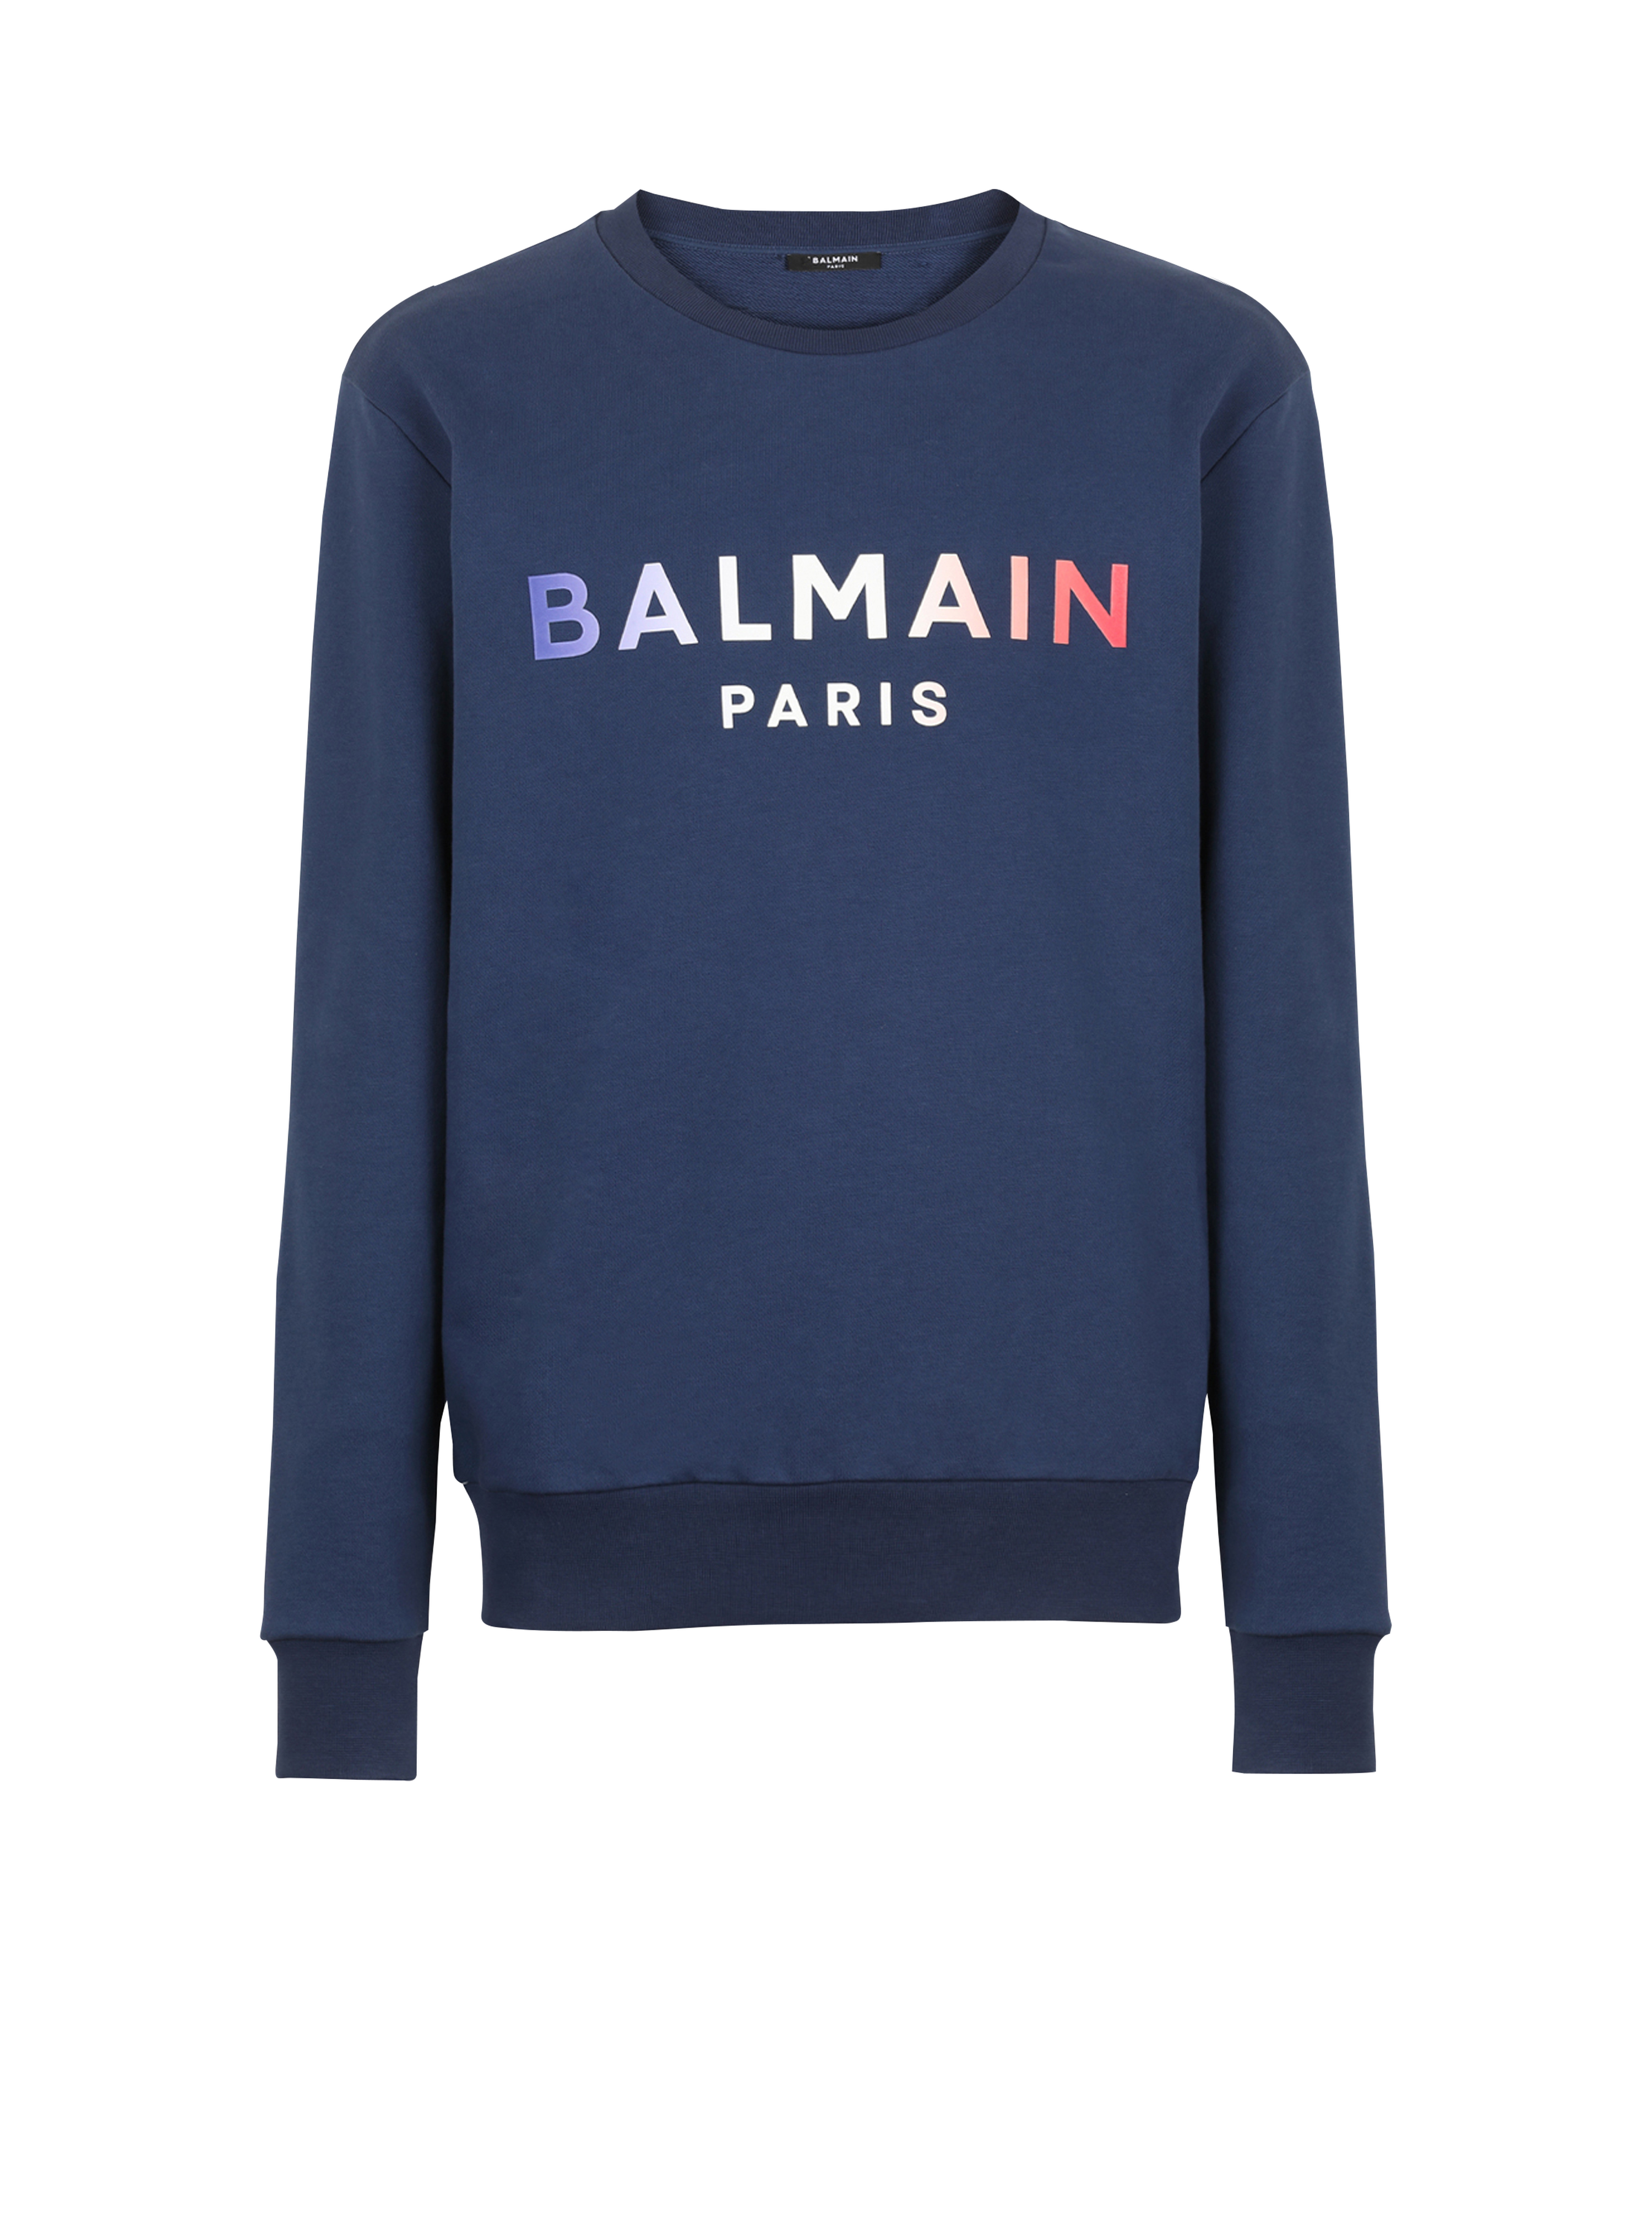 HIGH SUMMER CAPSULE - Sweat en coton imprimé tie and die logo Balmain Paris, bleu marine